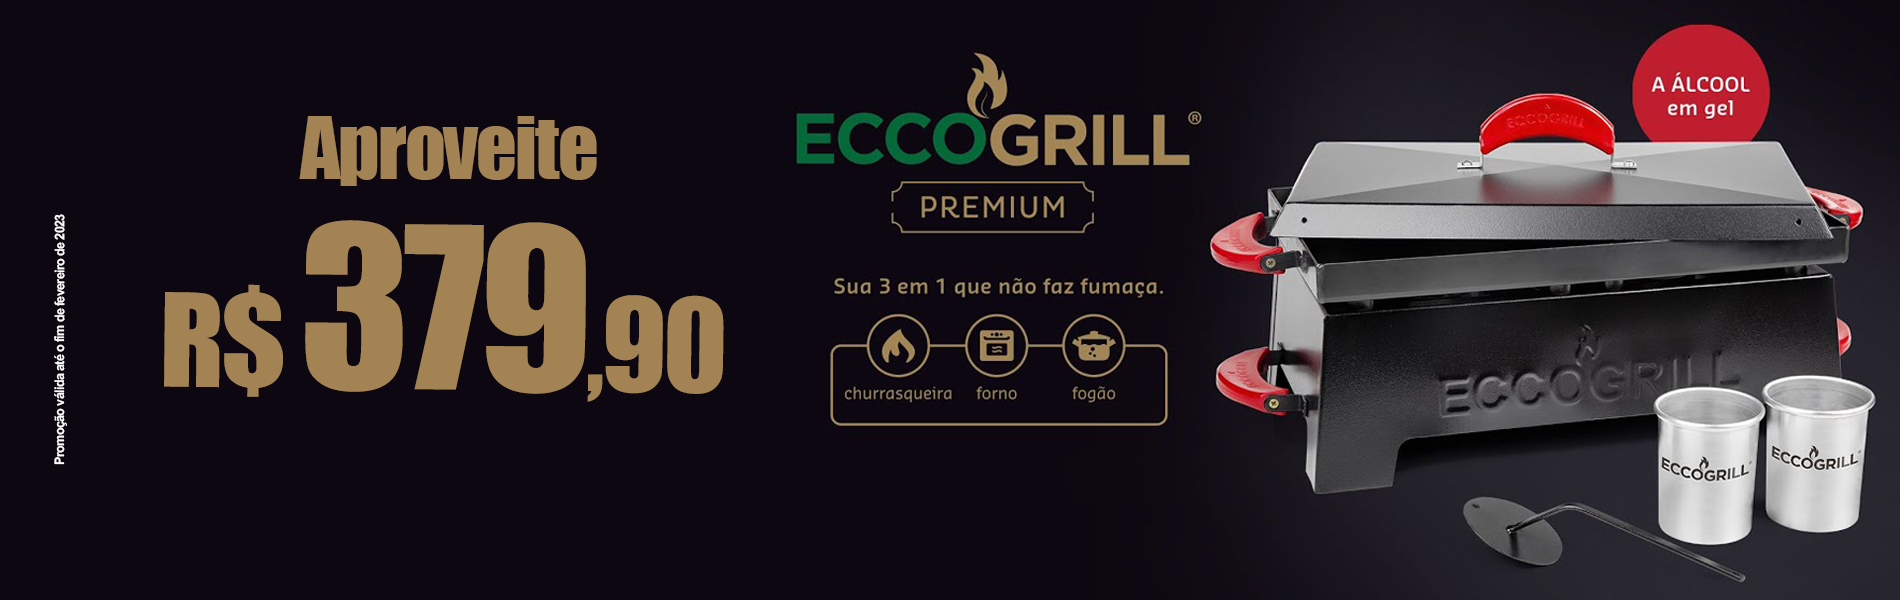 Churrasqueira Eccogrill Premium